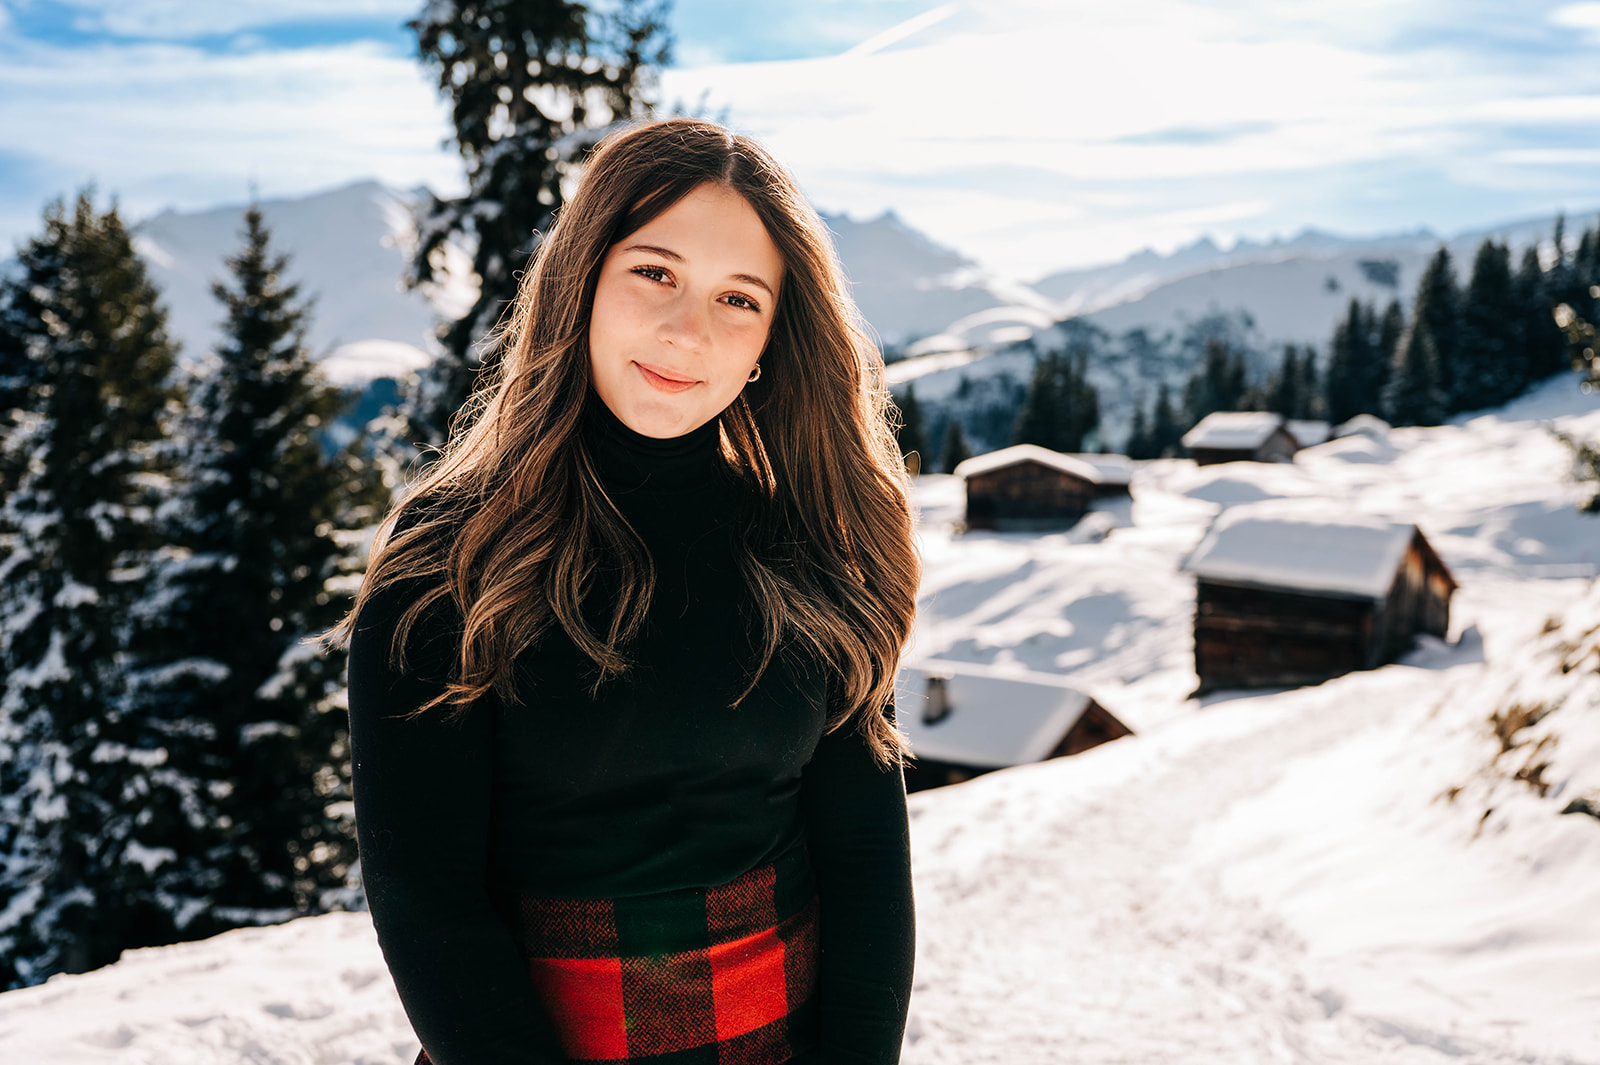 Teenager Swiss Alps Portraits Winter Snow